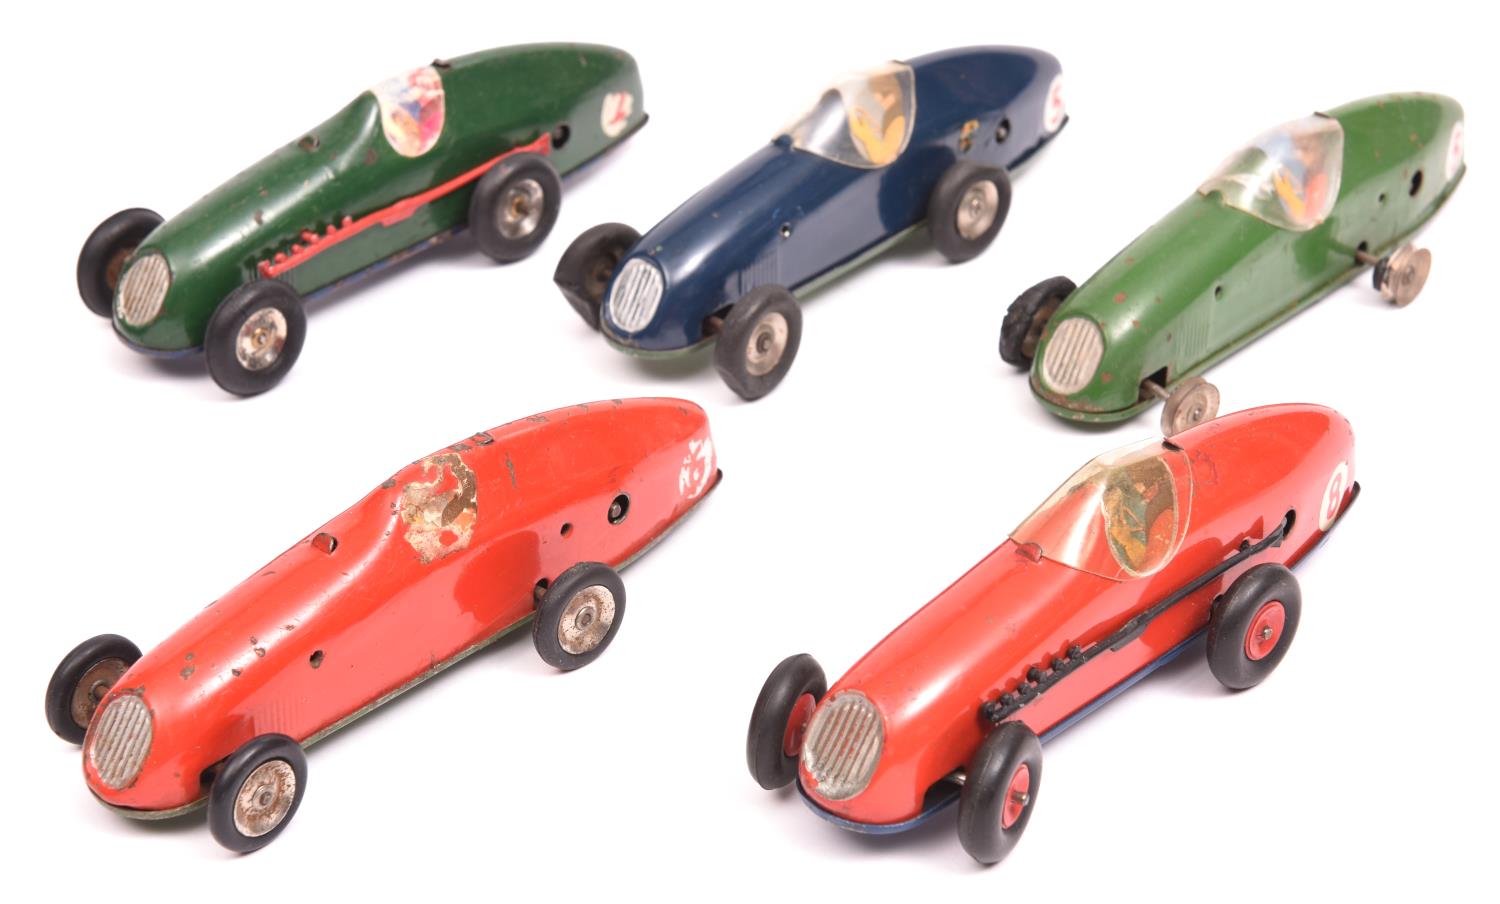 5x Tri-ang Minic clockwork Racing Cars (13M). All post-war examples; 2x red - RN6 & RN8, green -